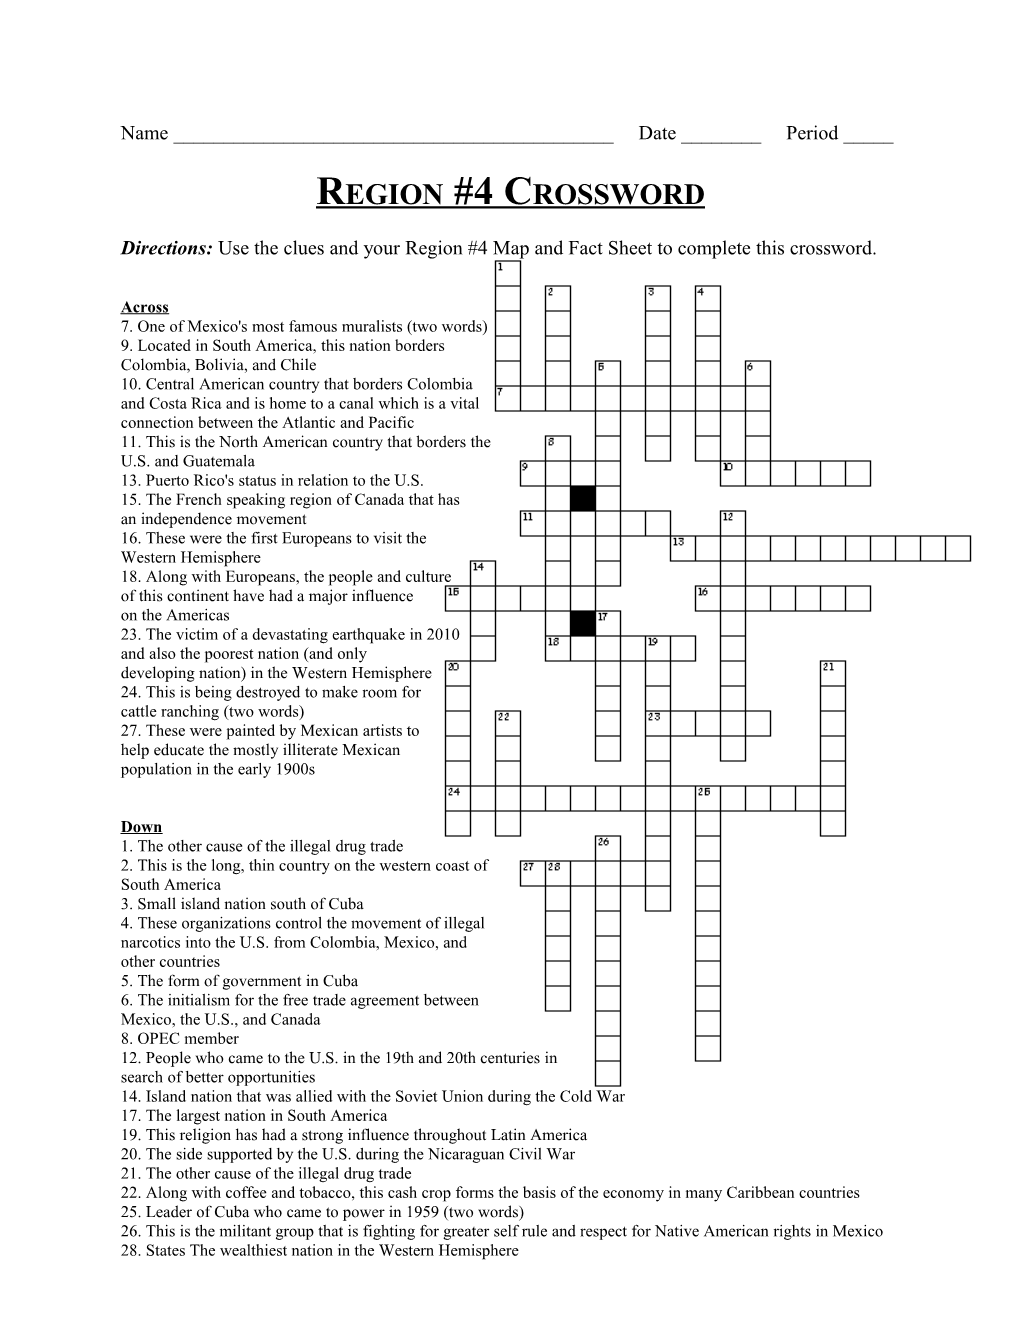 Region #4 Crossword